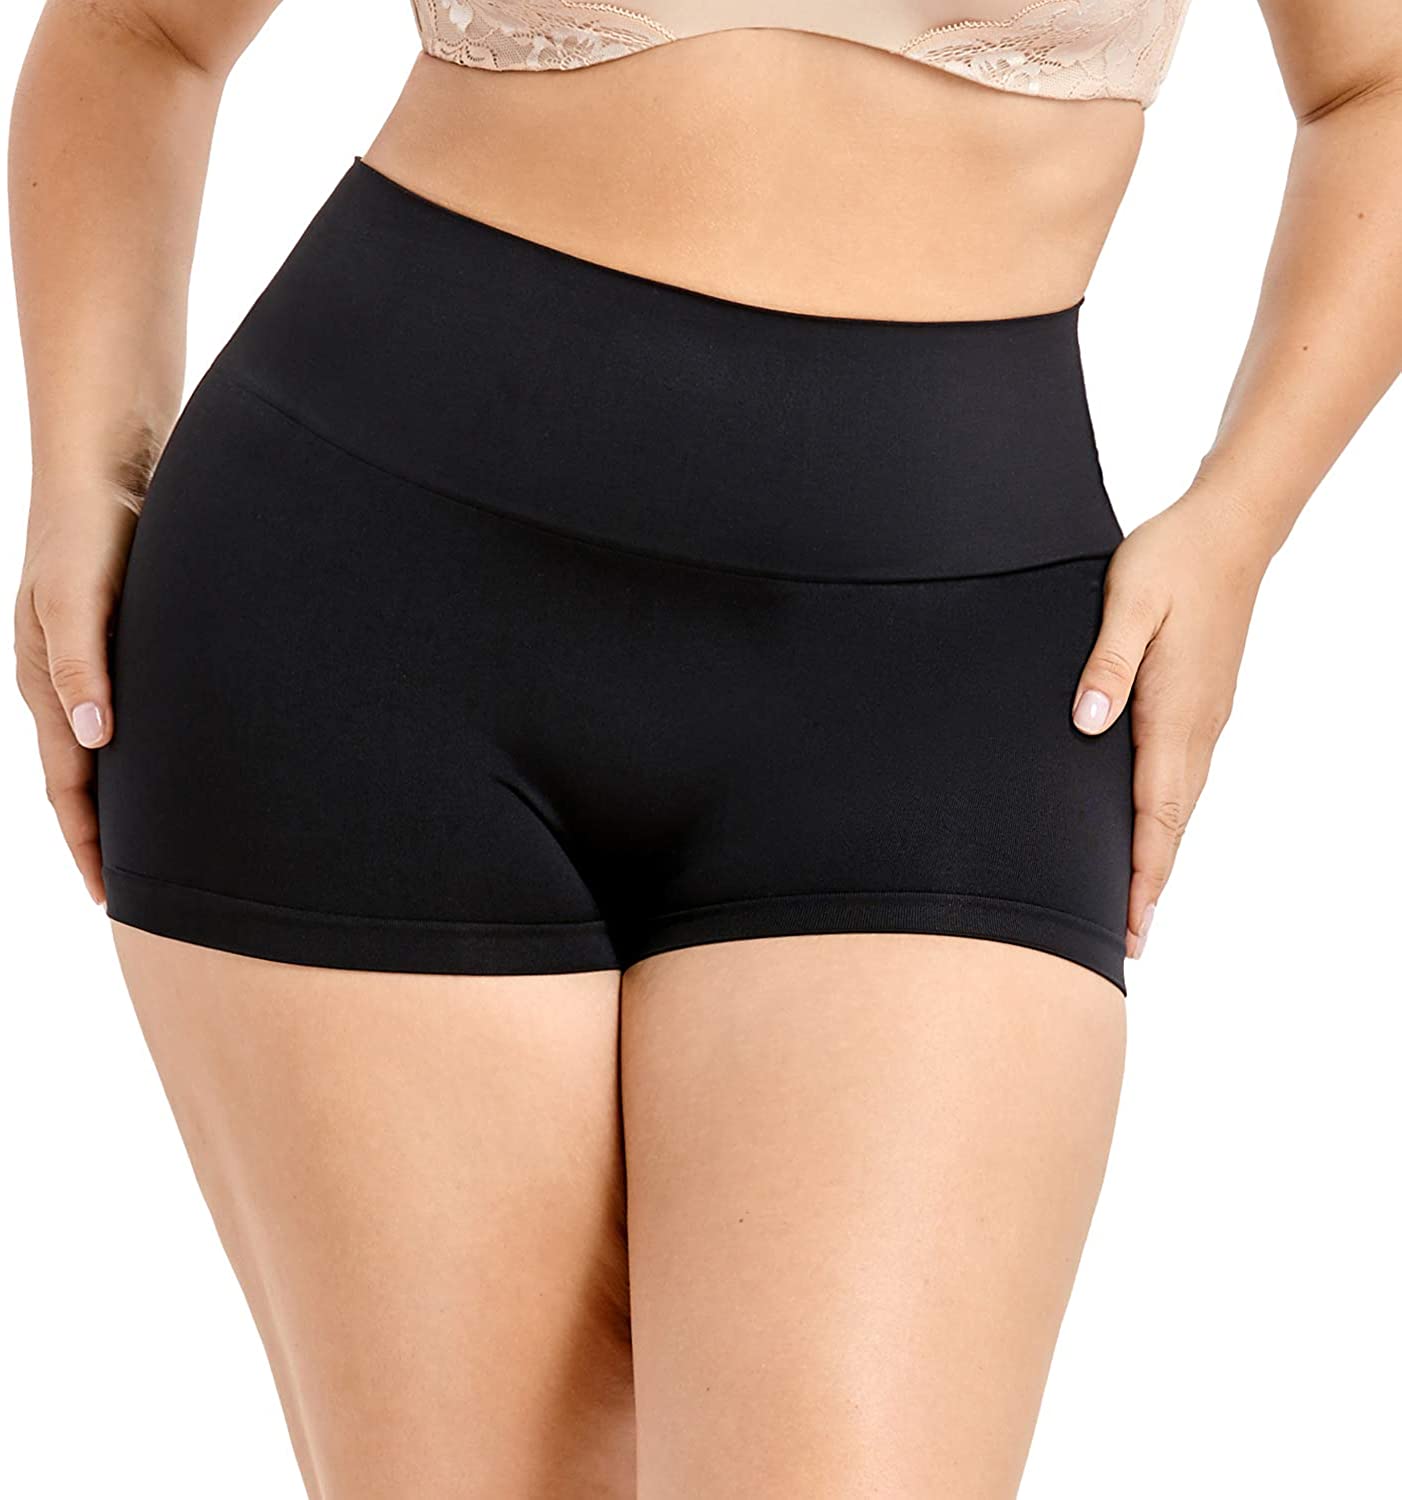 DELIMIRA Women High-Waist Boyshort Shapewear Tummy Control Panties